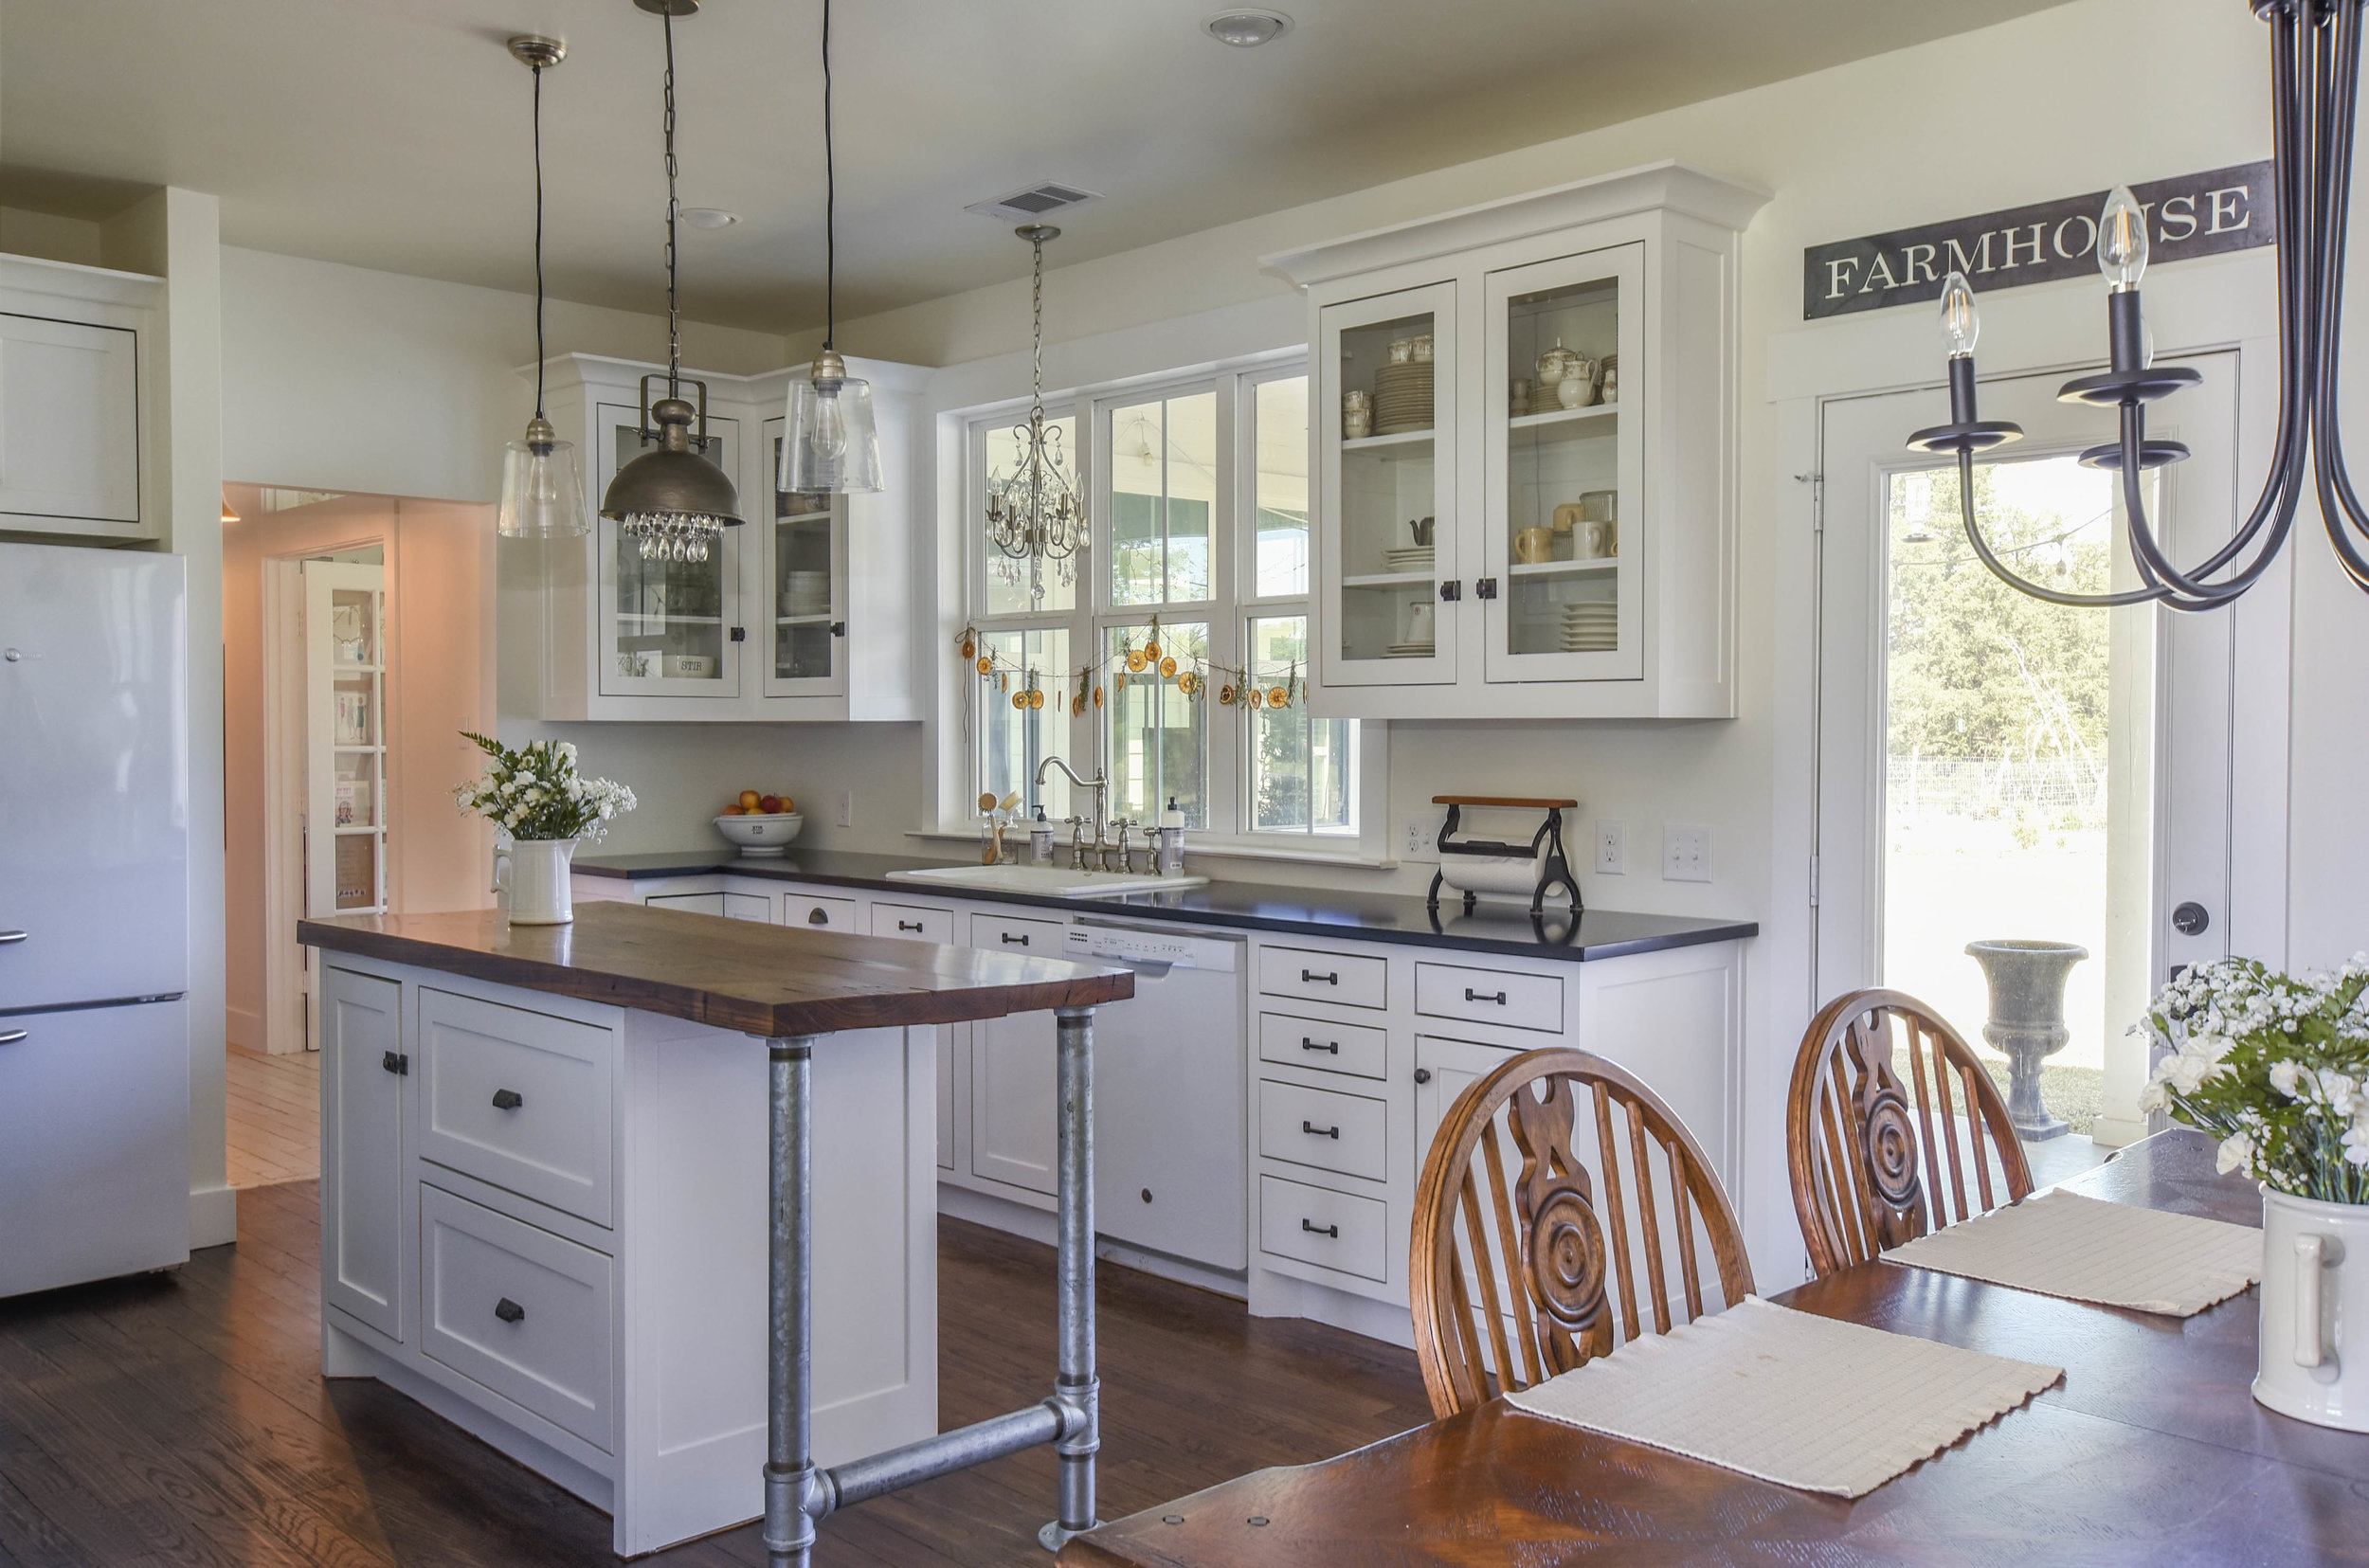 Shellie Bjork Photo of bright, white farmhouse kitchen and breakfast table